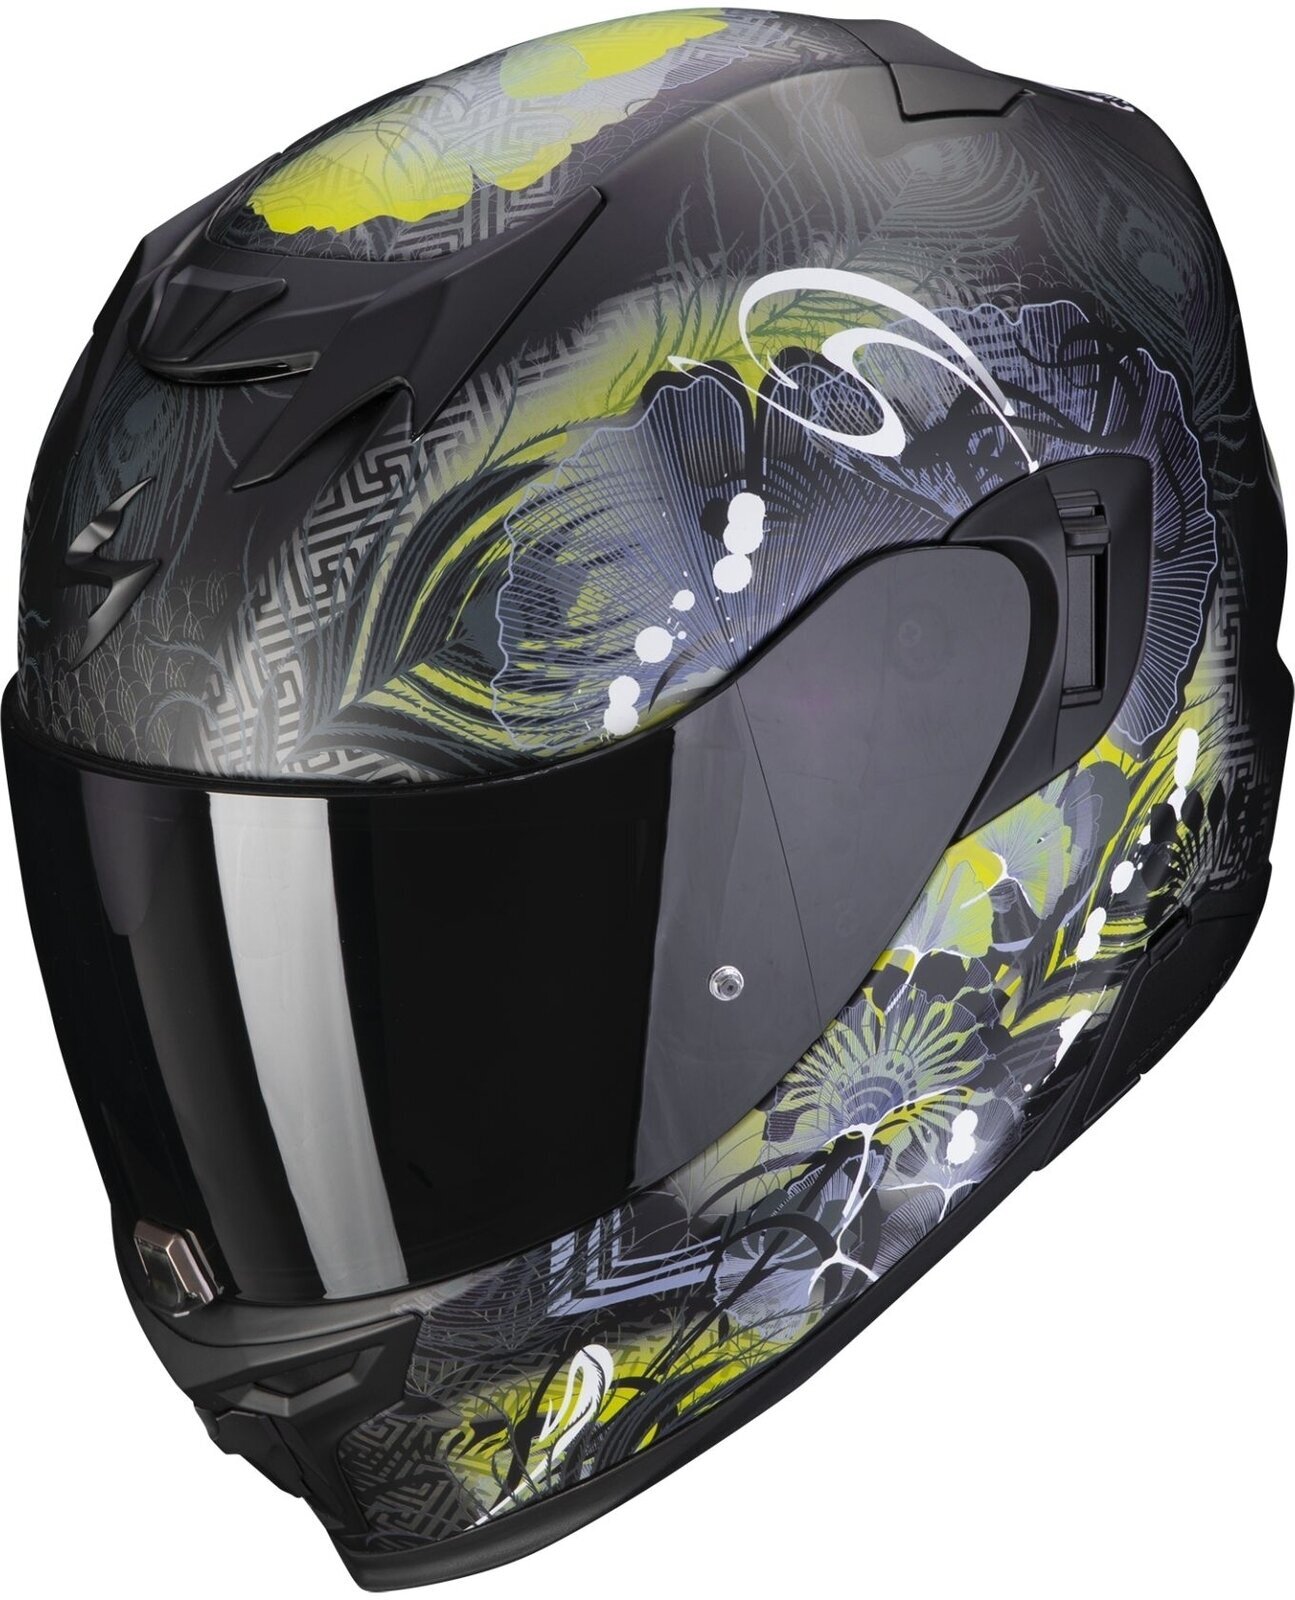 Helmet Scorpion EXO 520 EVO AIR MELROSE Matt Black/Yellow S Helmet